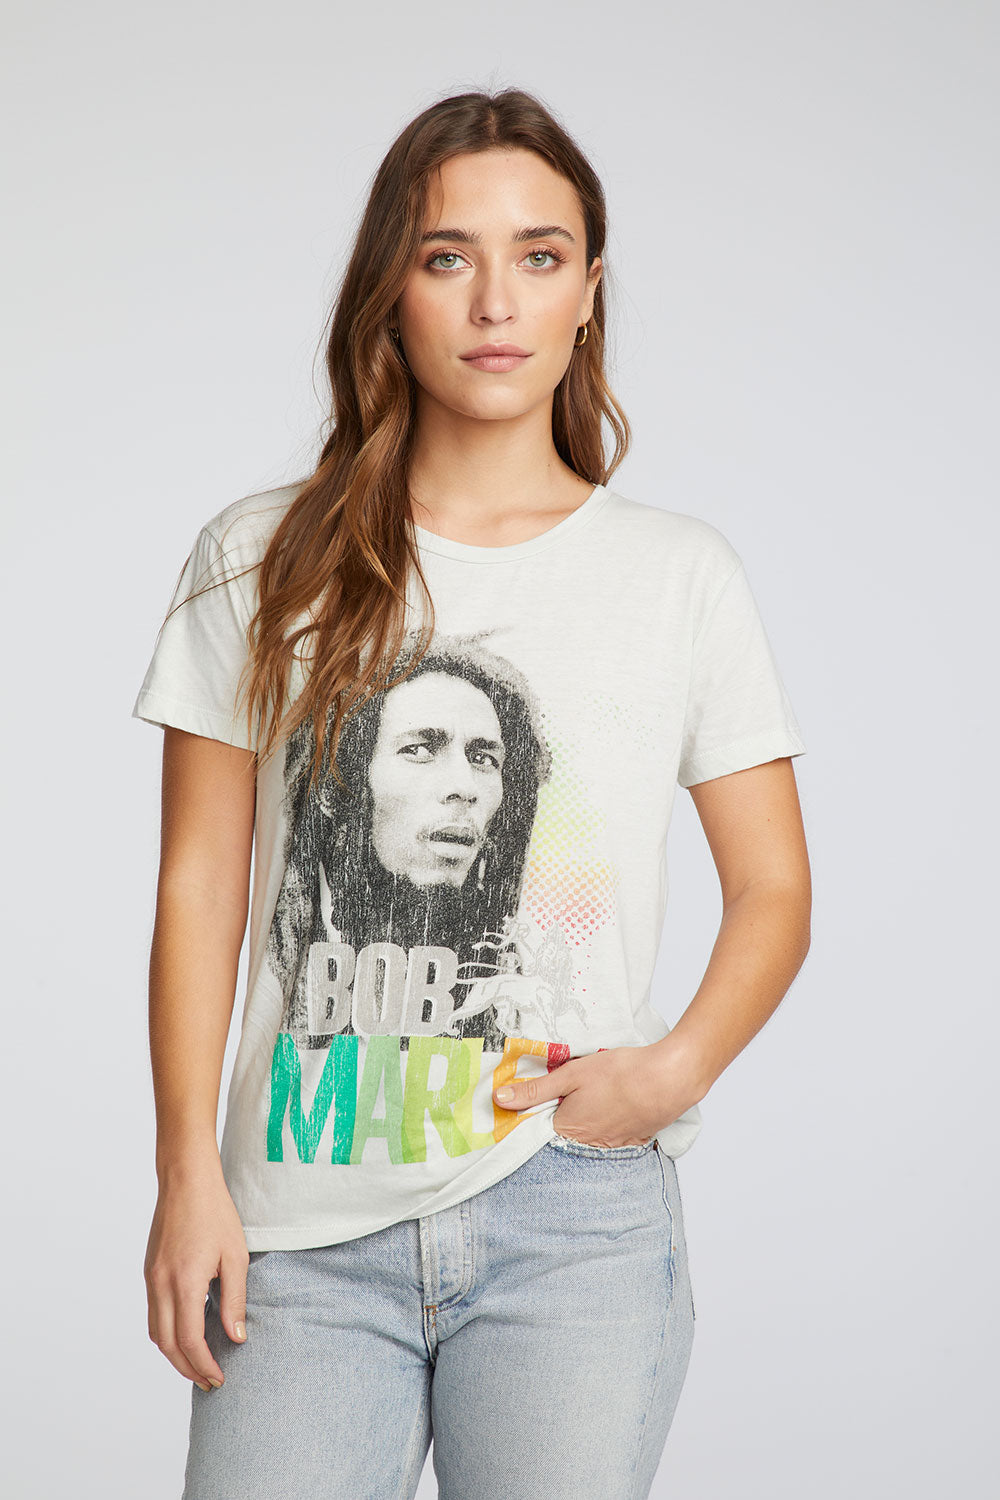 Bob Marley Rasta WOMENS chaserbrand